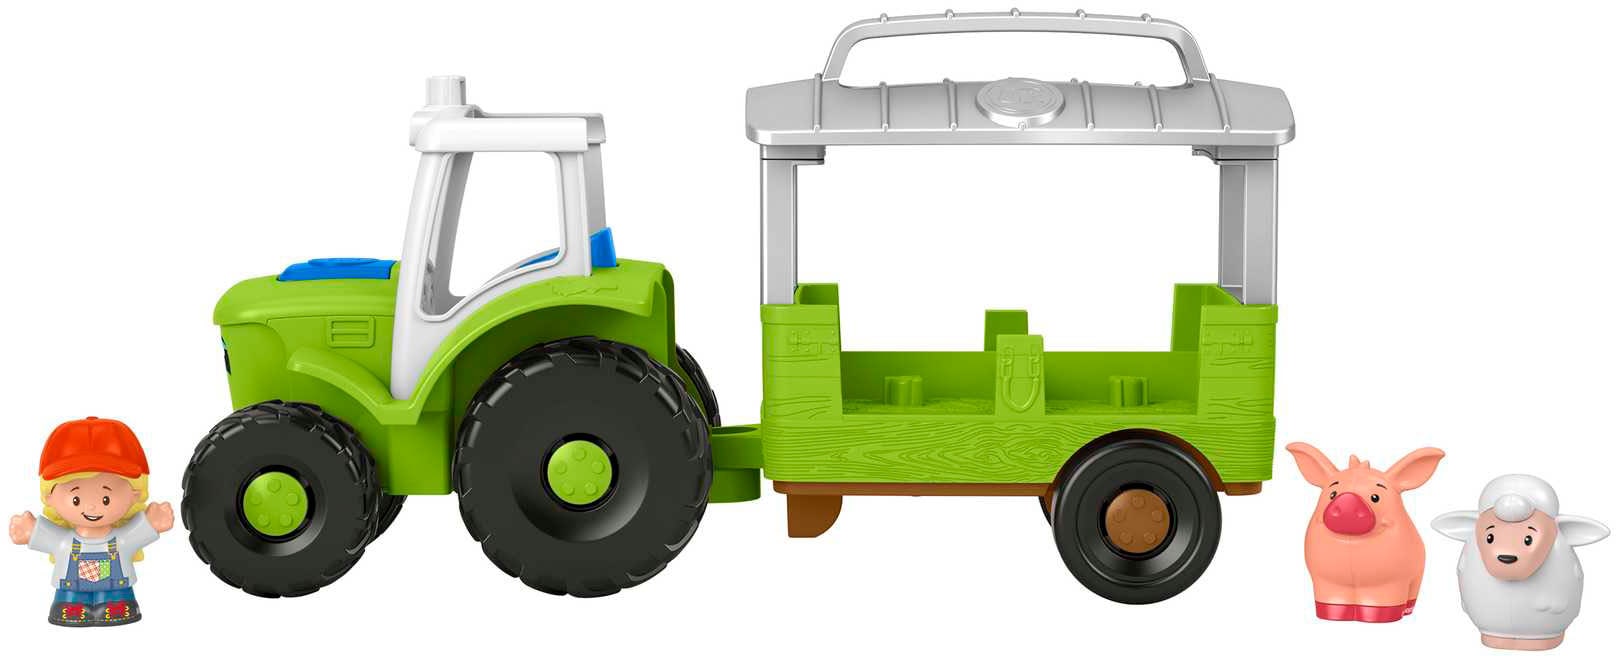 Traktor mit Anhänger Little Farm